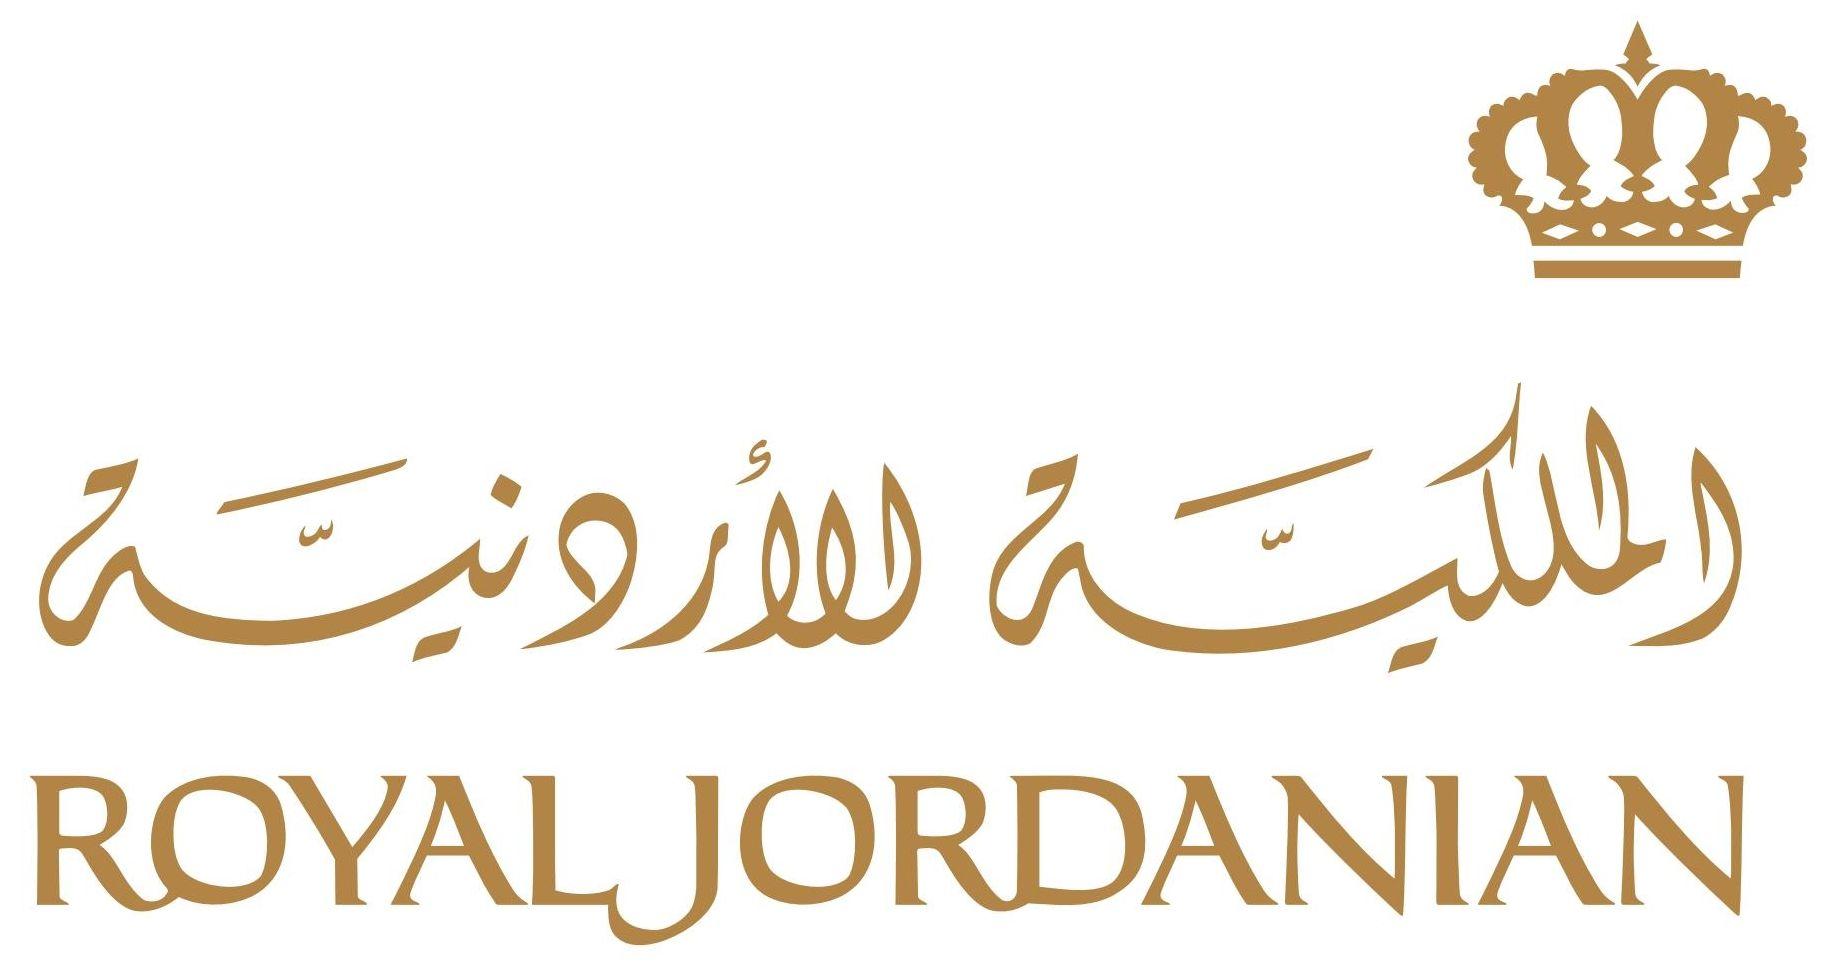 Gold Airline Logo - Royal Jordanian Airlines Logo. Airline Logos. Airline logo